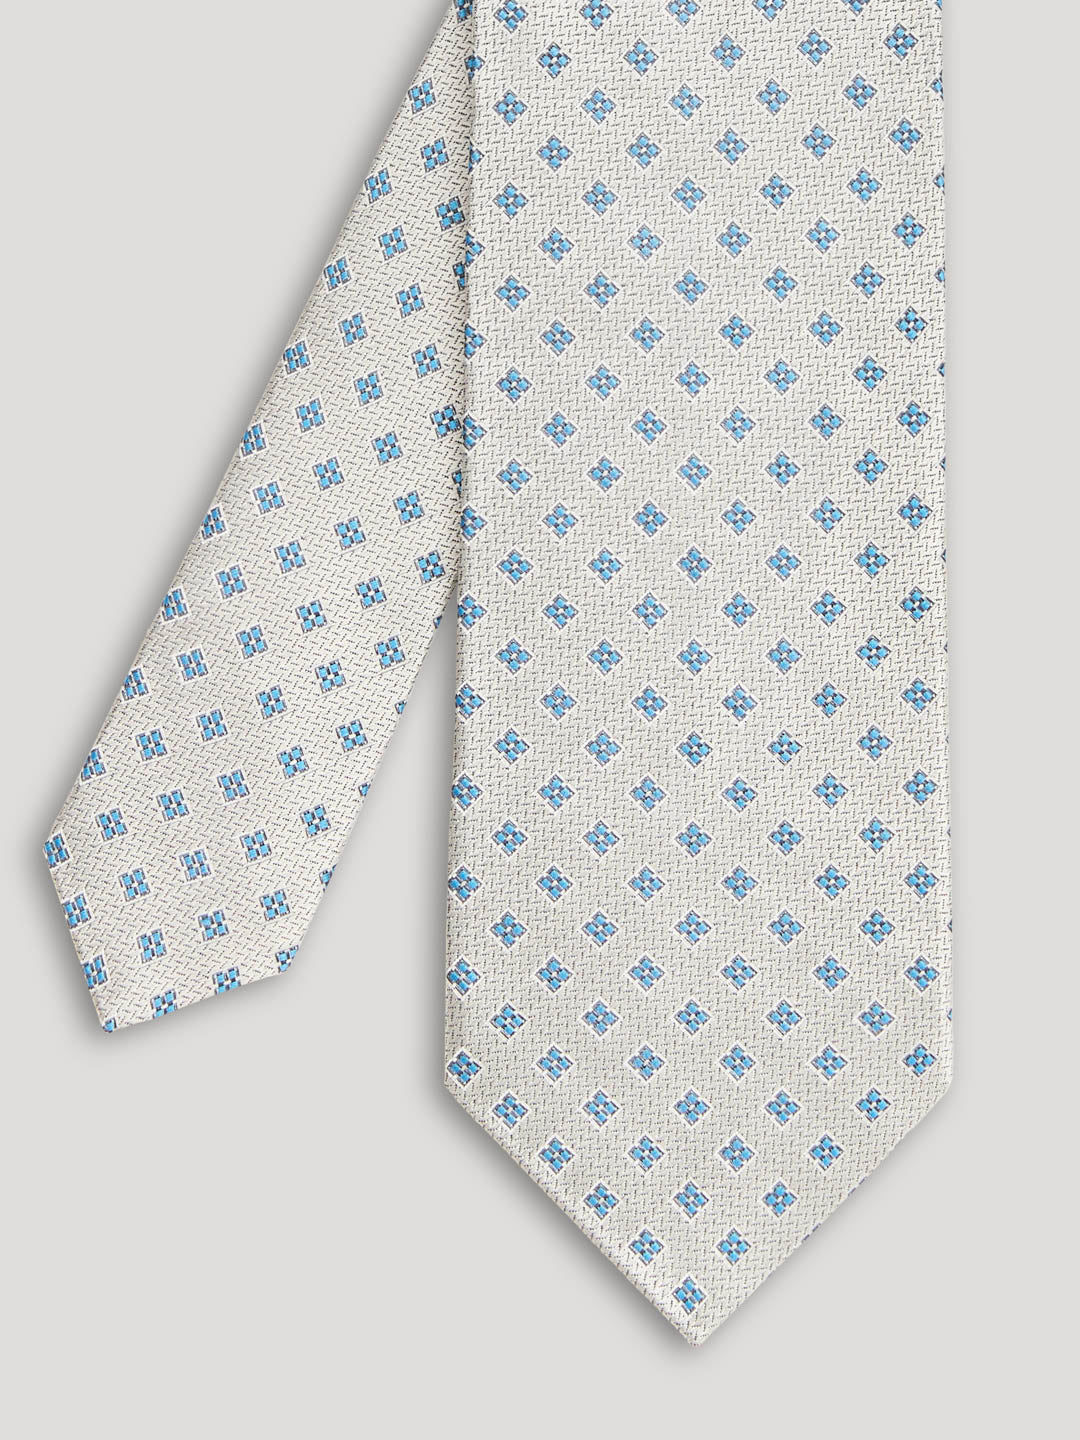 Silver tie with blue diamonds. 